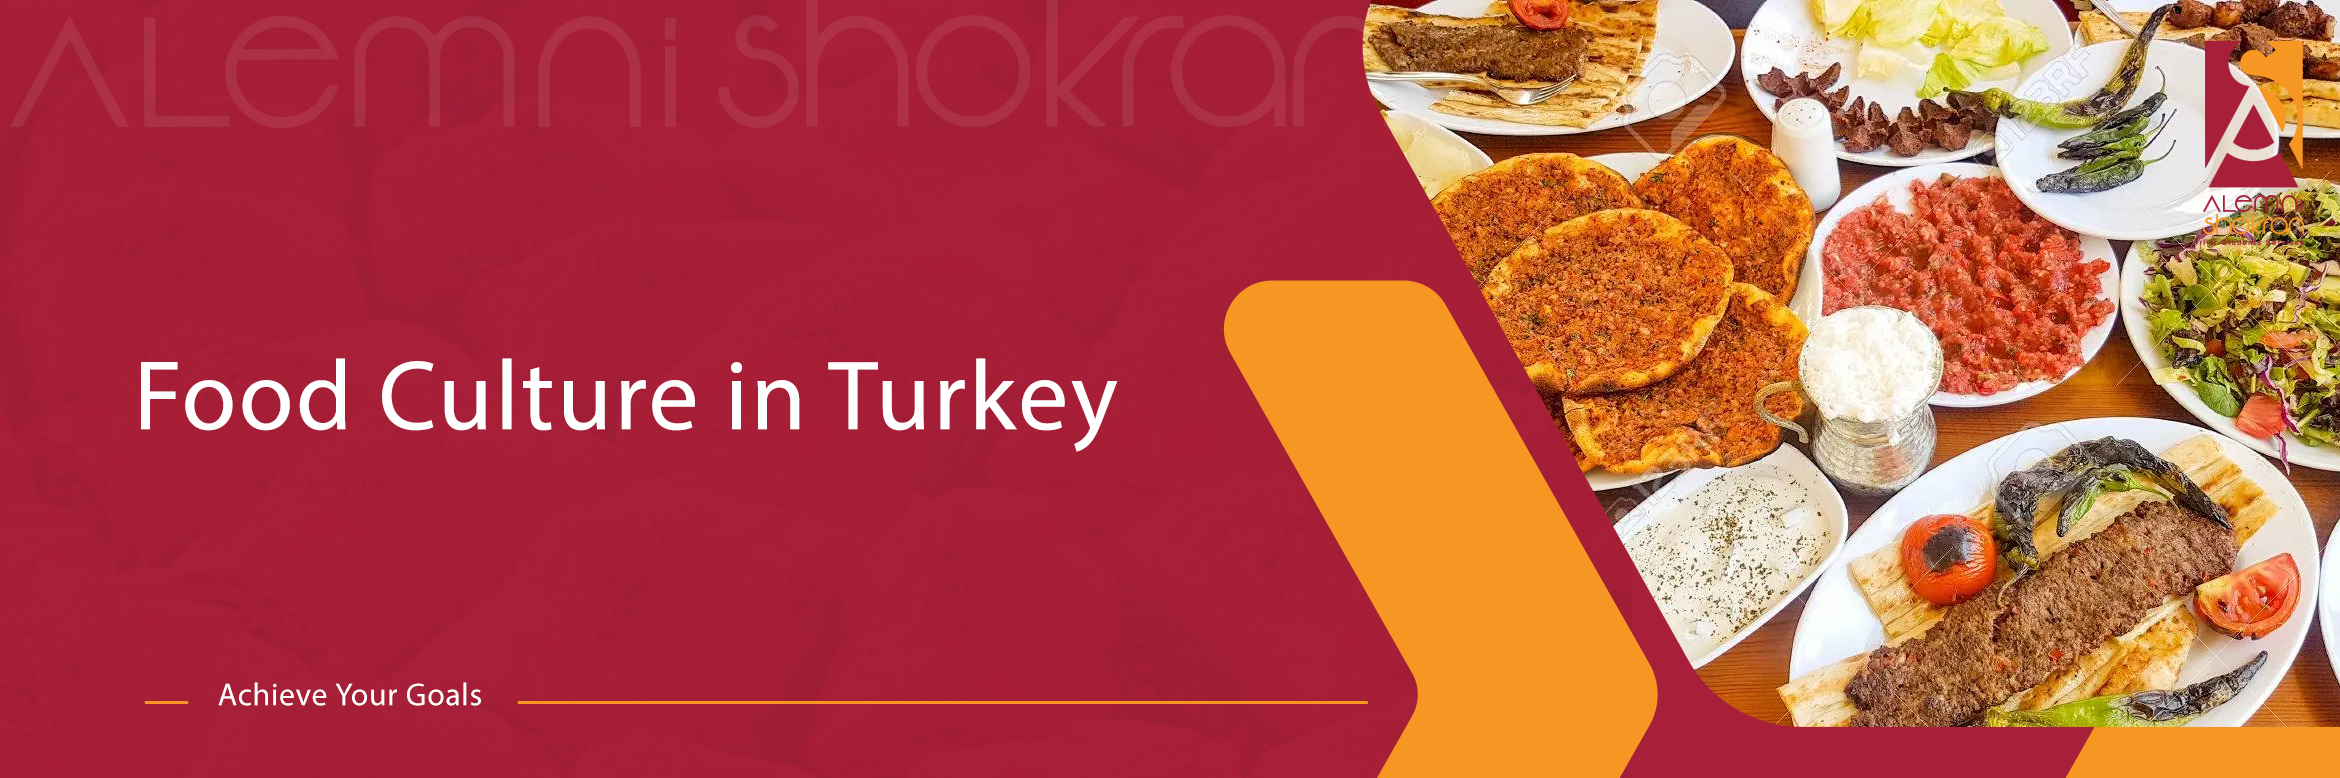 Food Culture in Turkey